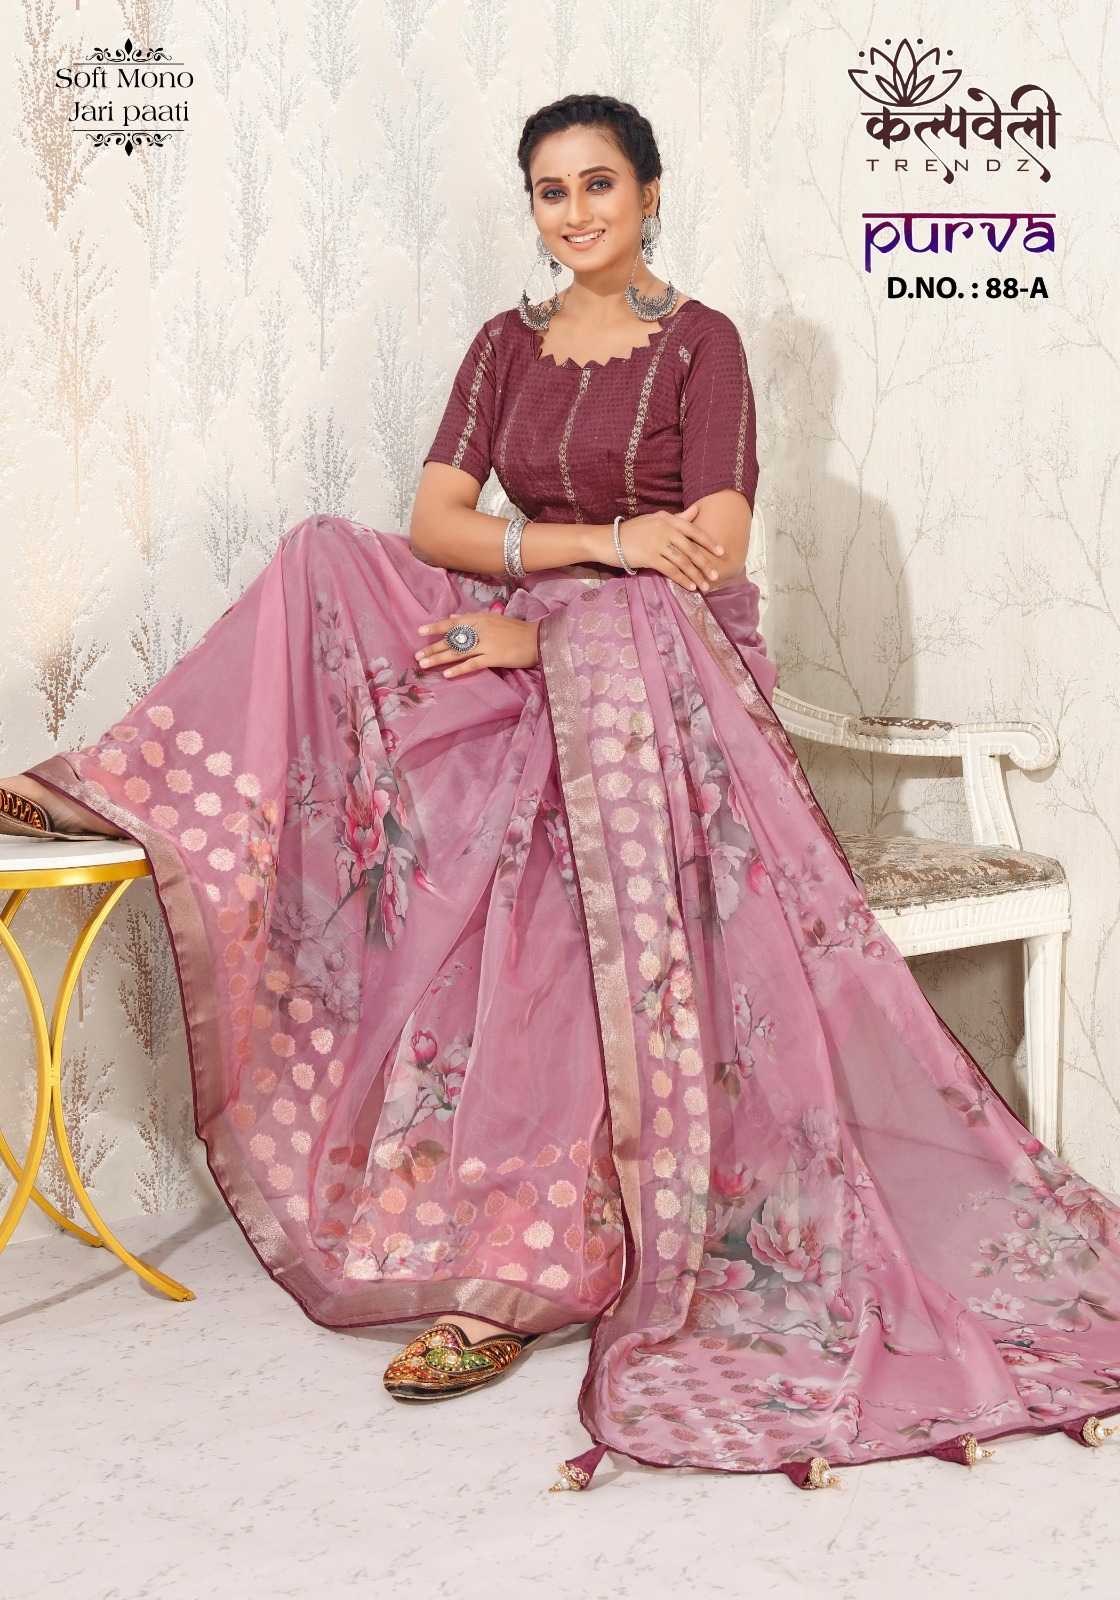 kalpavelly trendz purva 88 fancy mono sarees latest collection